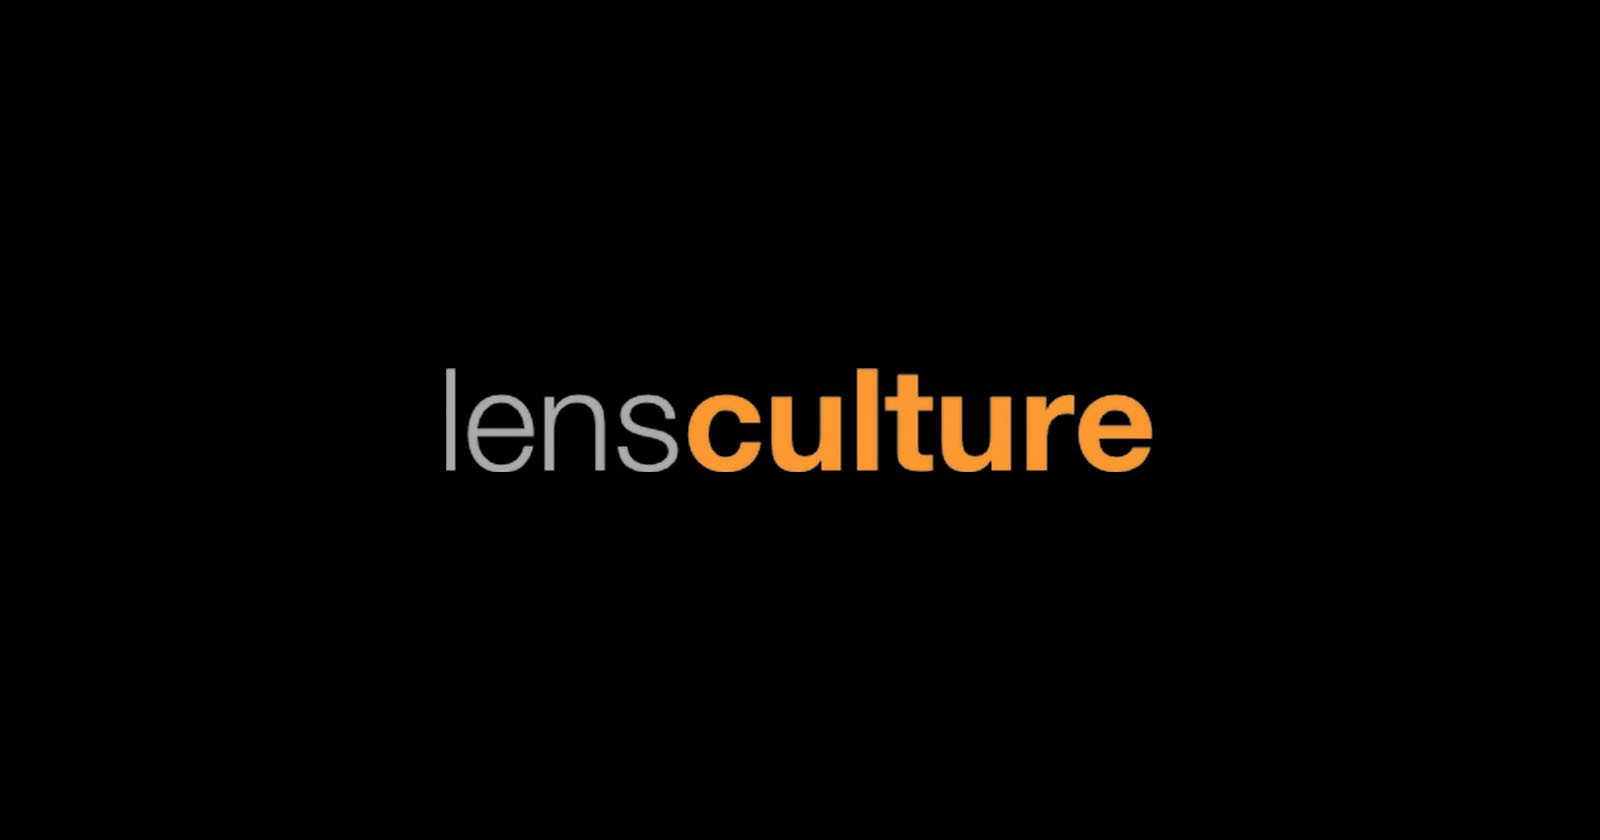  lensculture street photography awards spark questions bias 